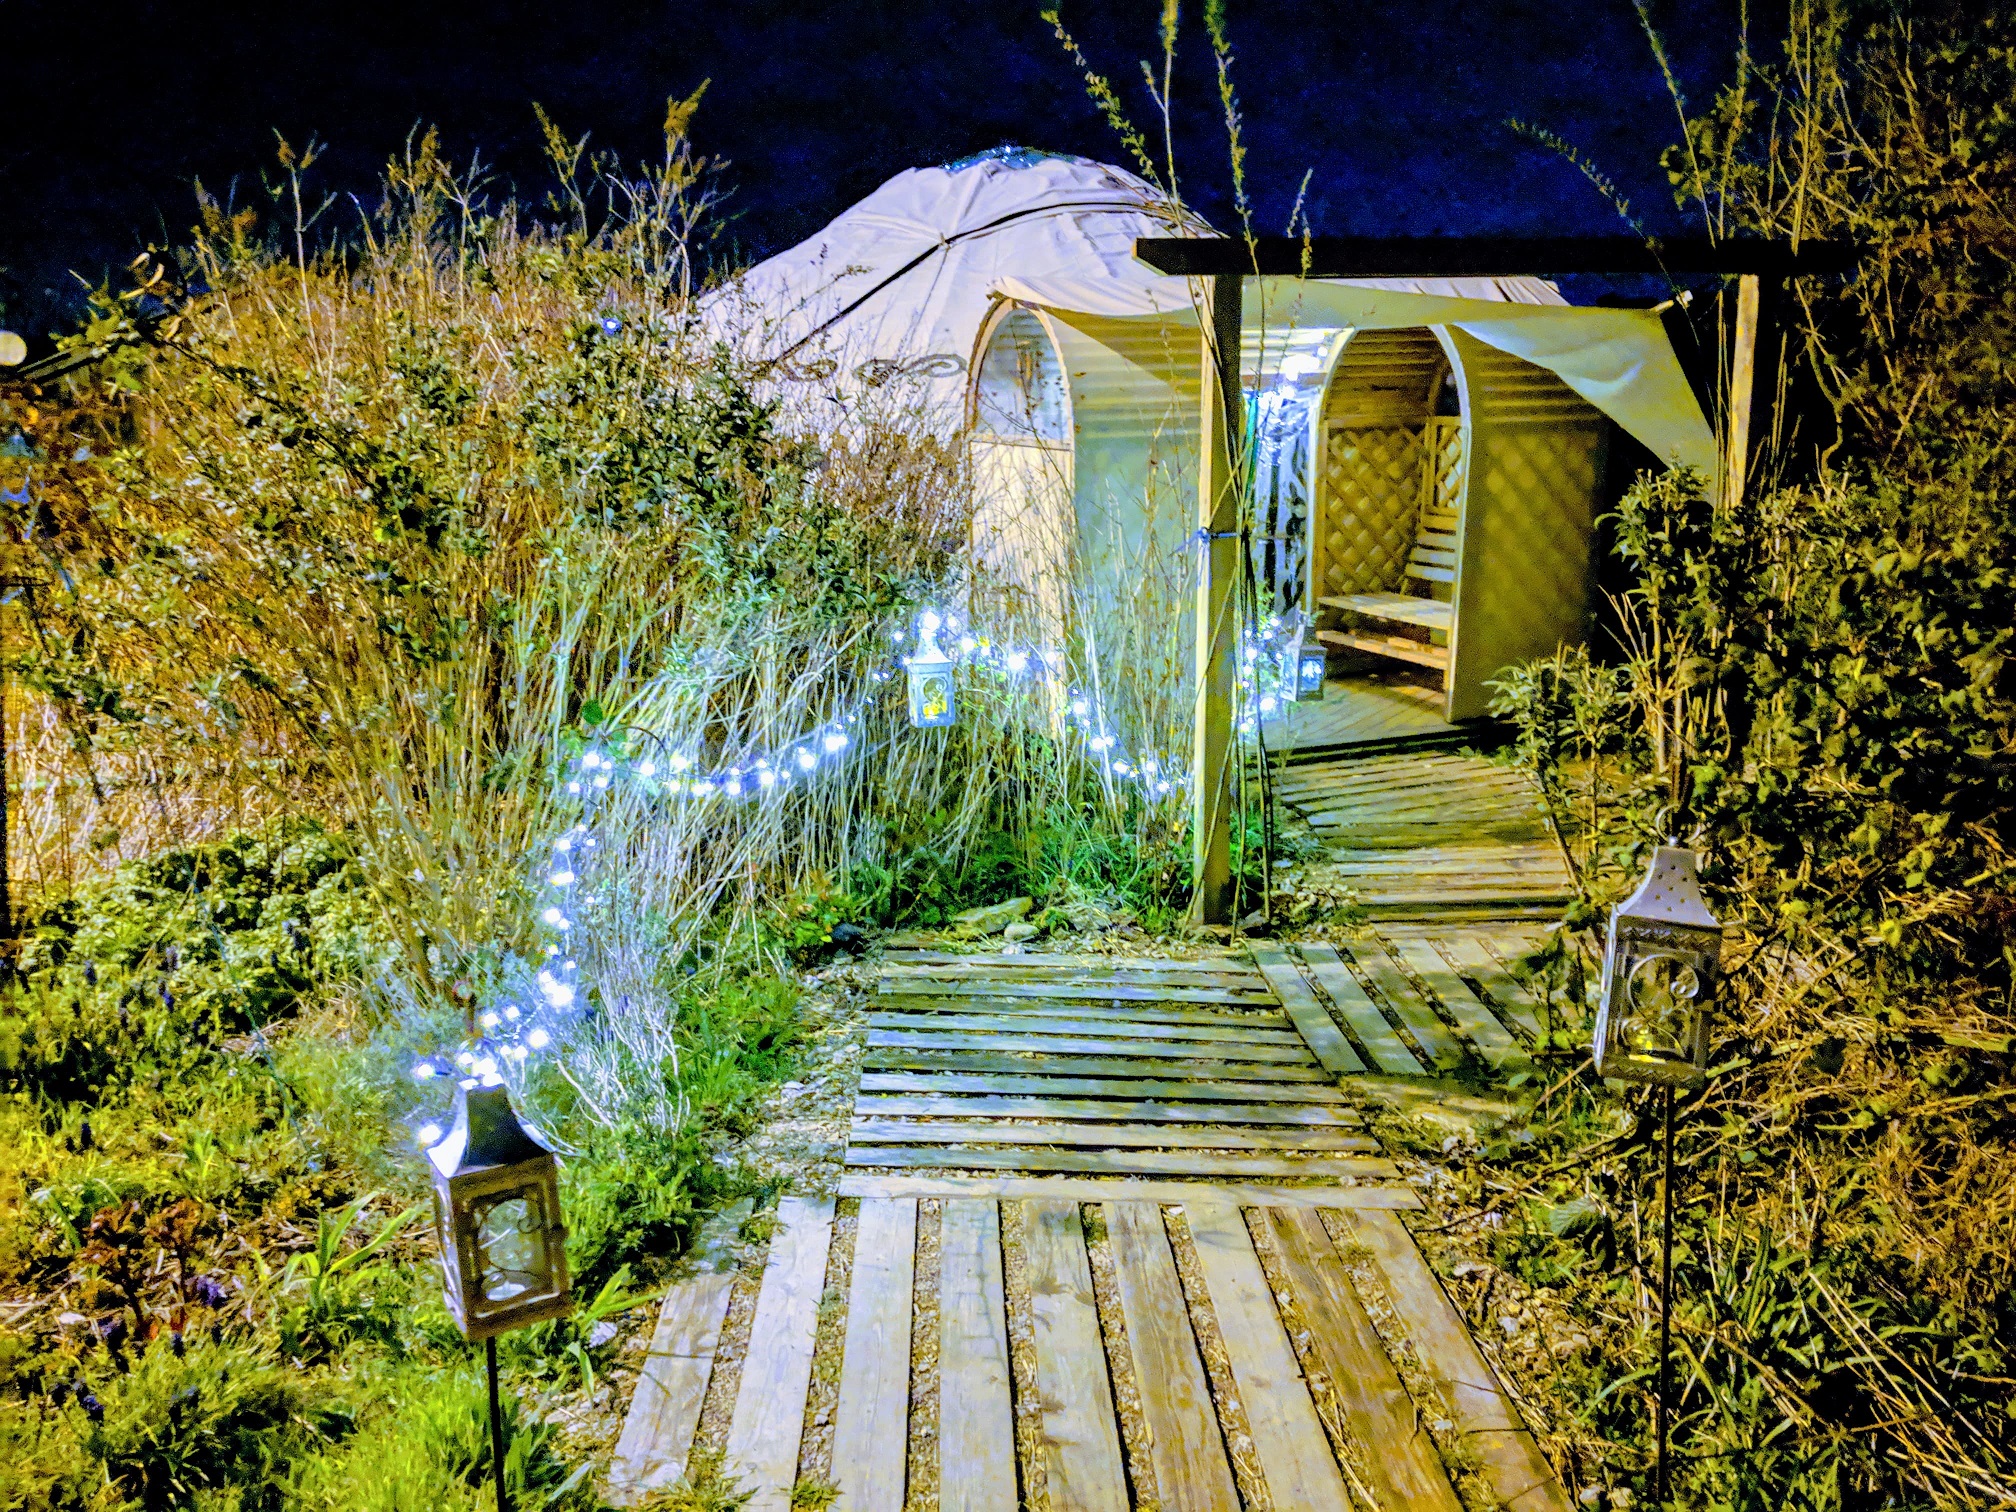 Sol Haven Yurt at night